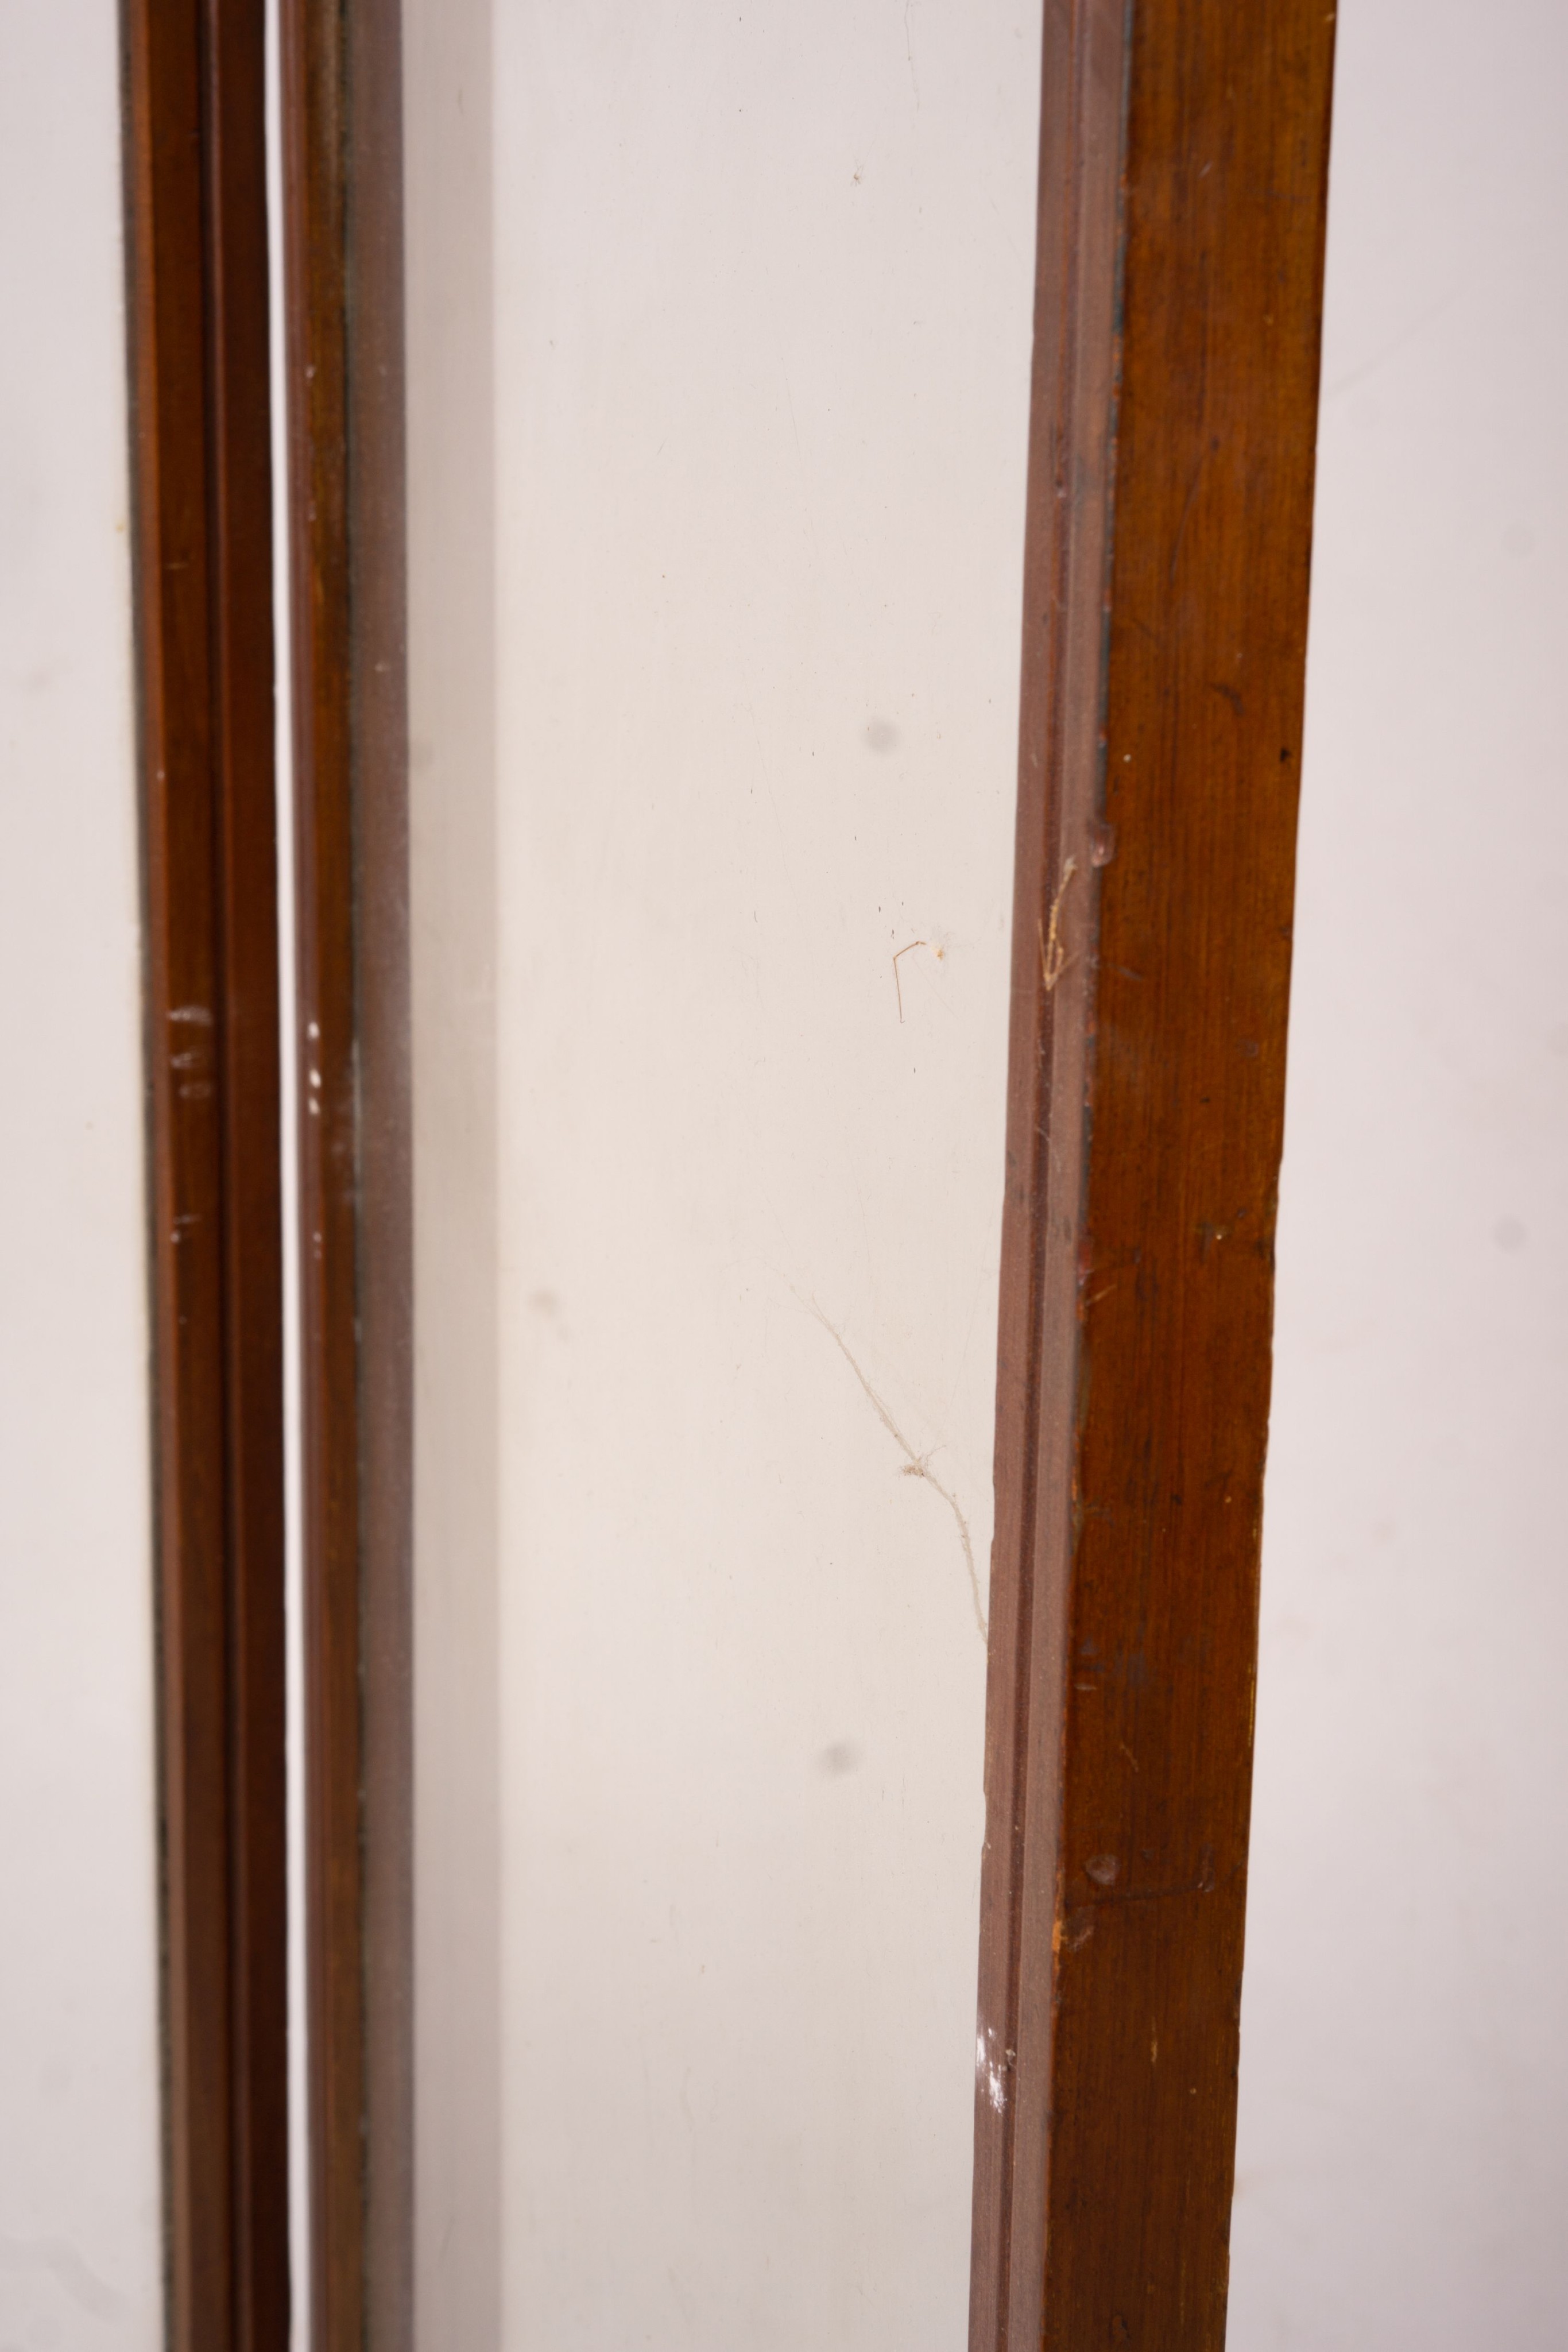 An Edwardian glazed mahogany three fold screen, each panel width 51cm, height 157cm